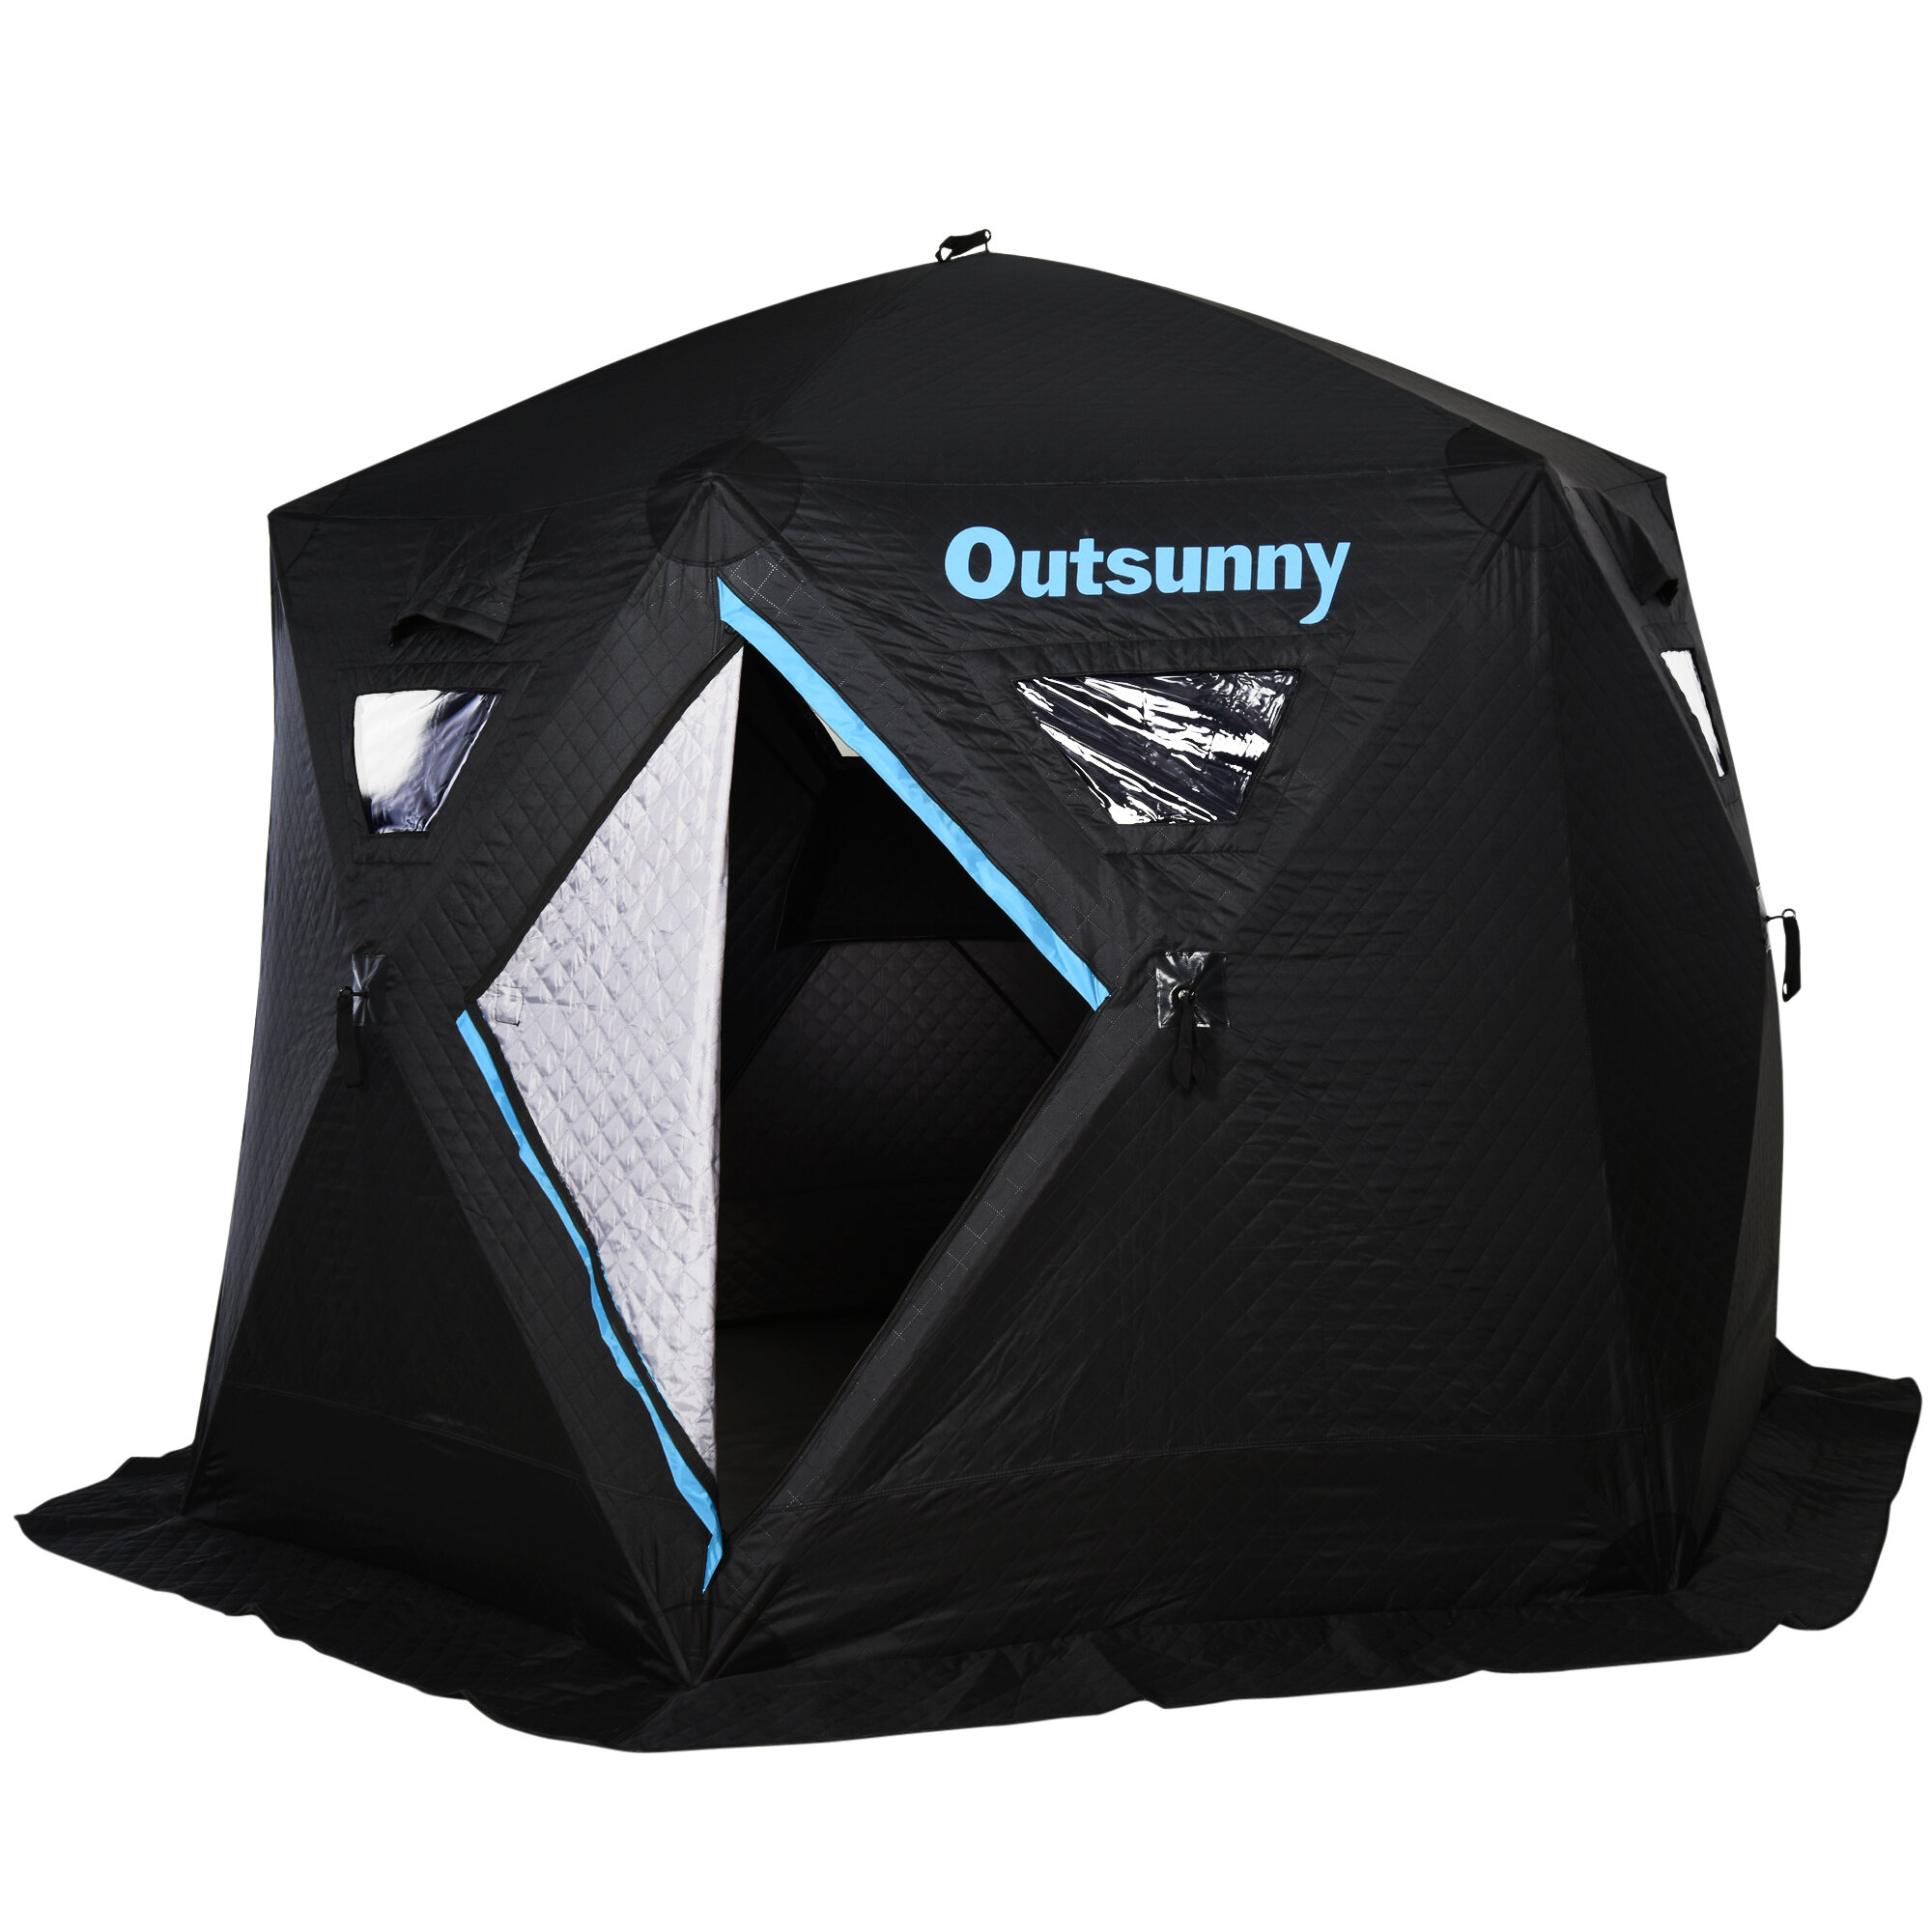 Outsunny 6 Person Tent - Wayfair Canada